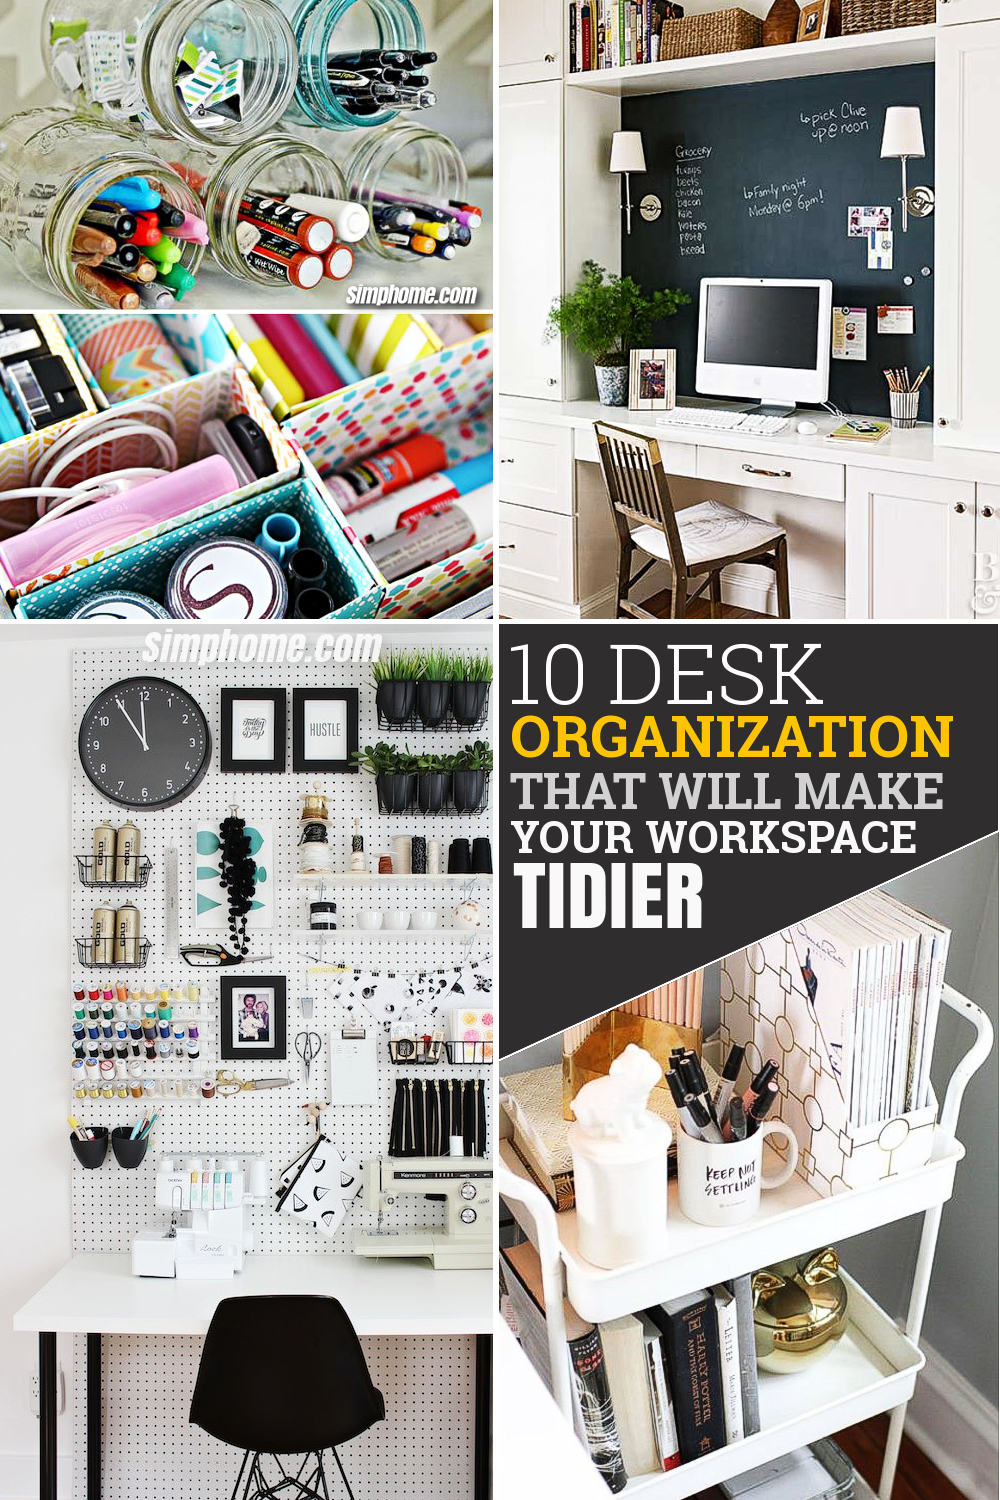 10 Desk Organization that will Make Your Workspace Tidier via Simphome com Pinterest Featured Image